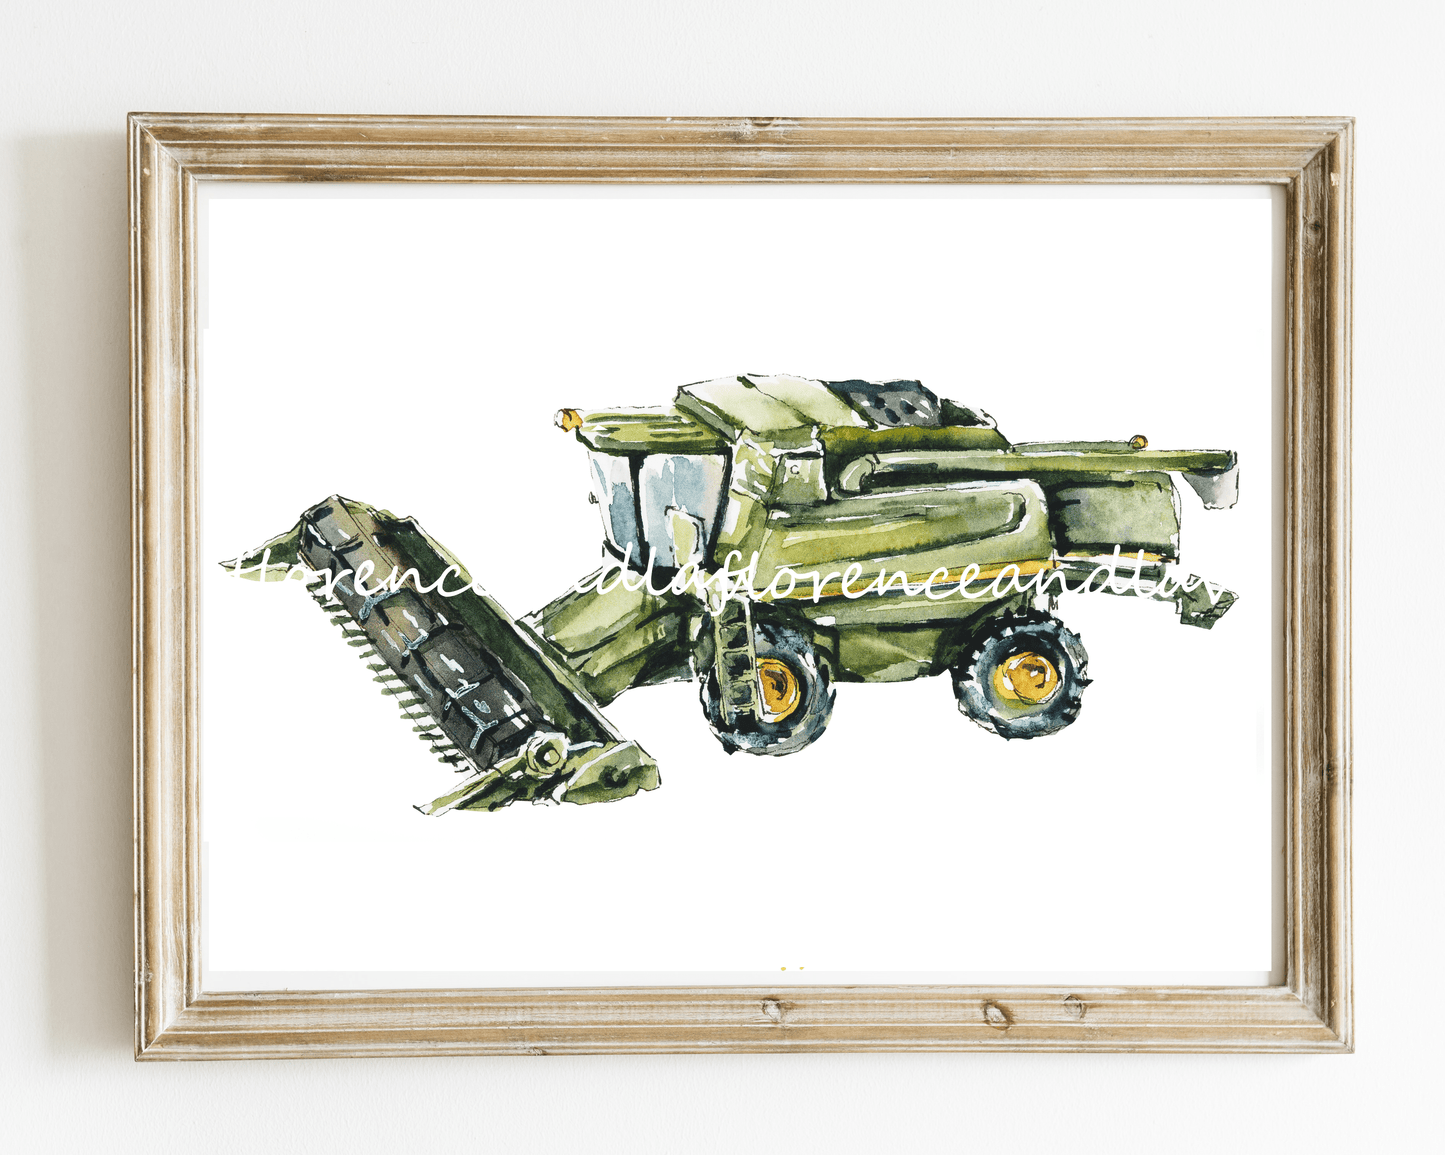 Trio of John Deere tractor prints - Florence & Lavender